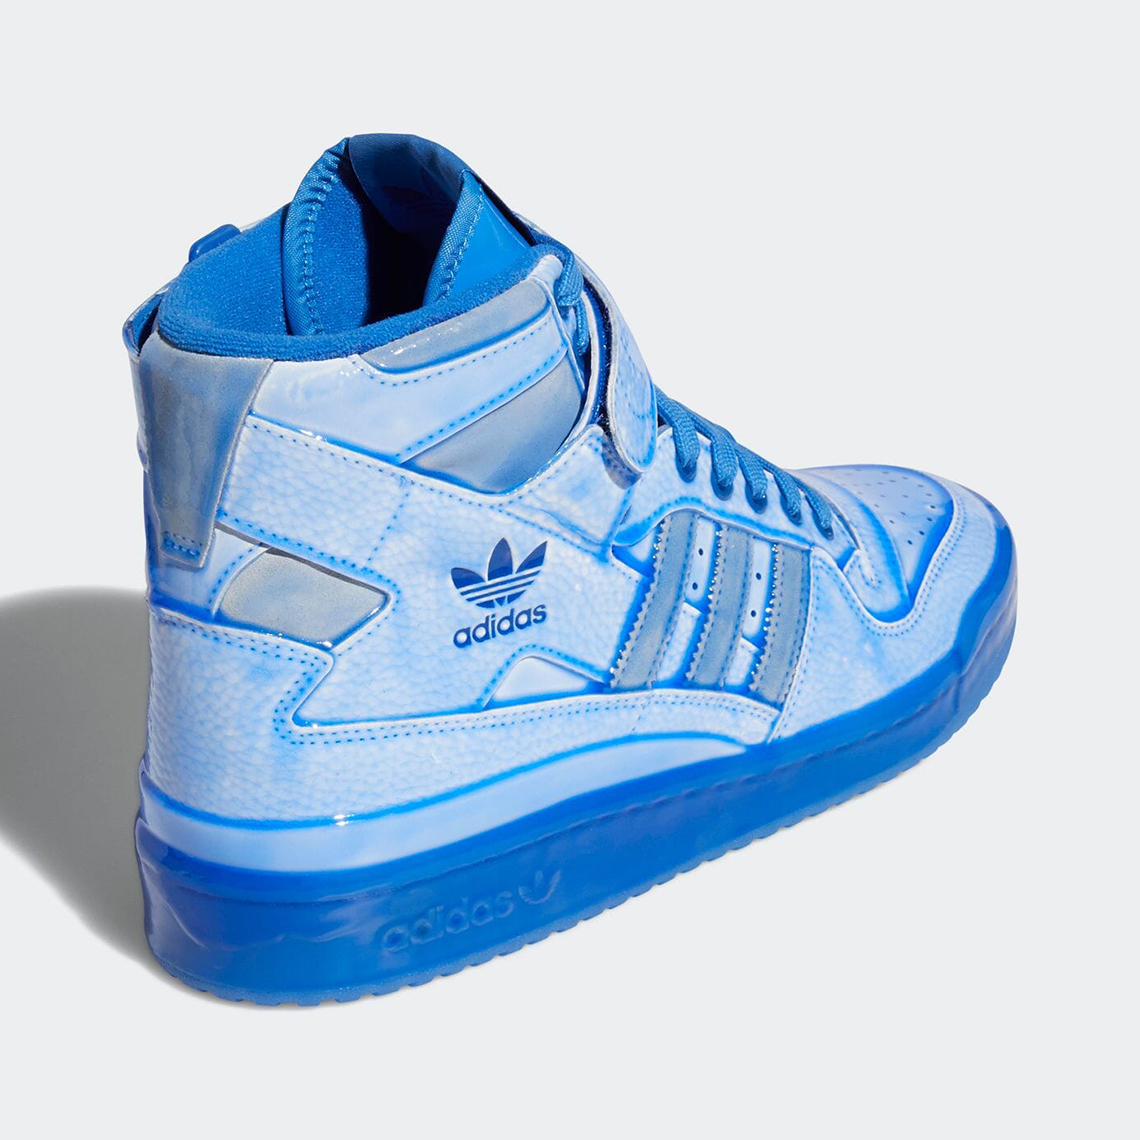 Jeremy Scott Adidas Forum Hi Dipped Blue G54995 1